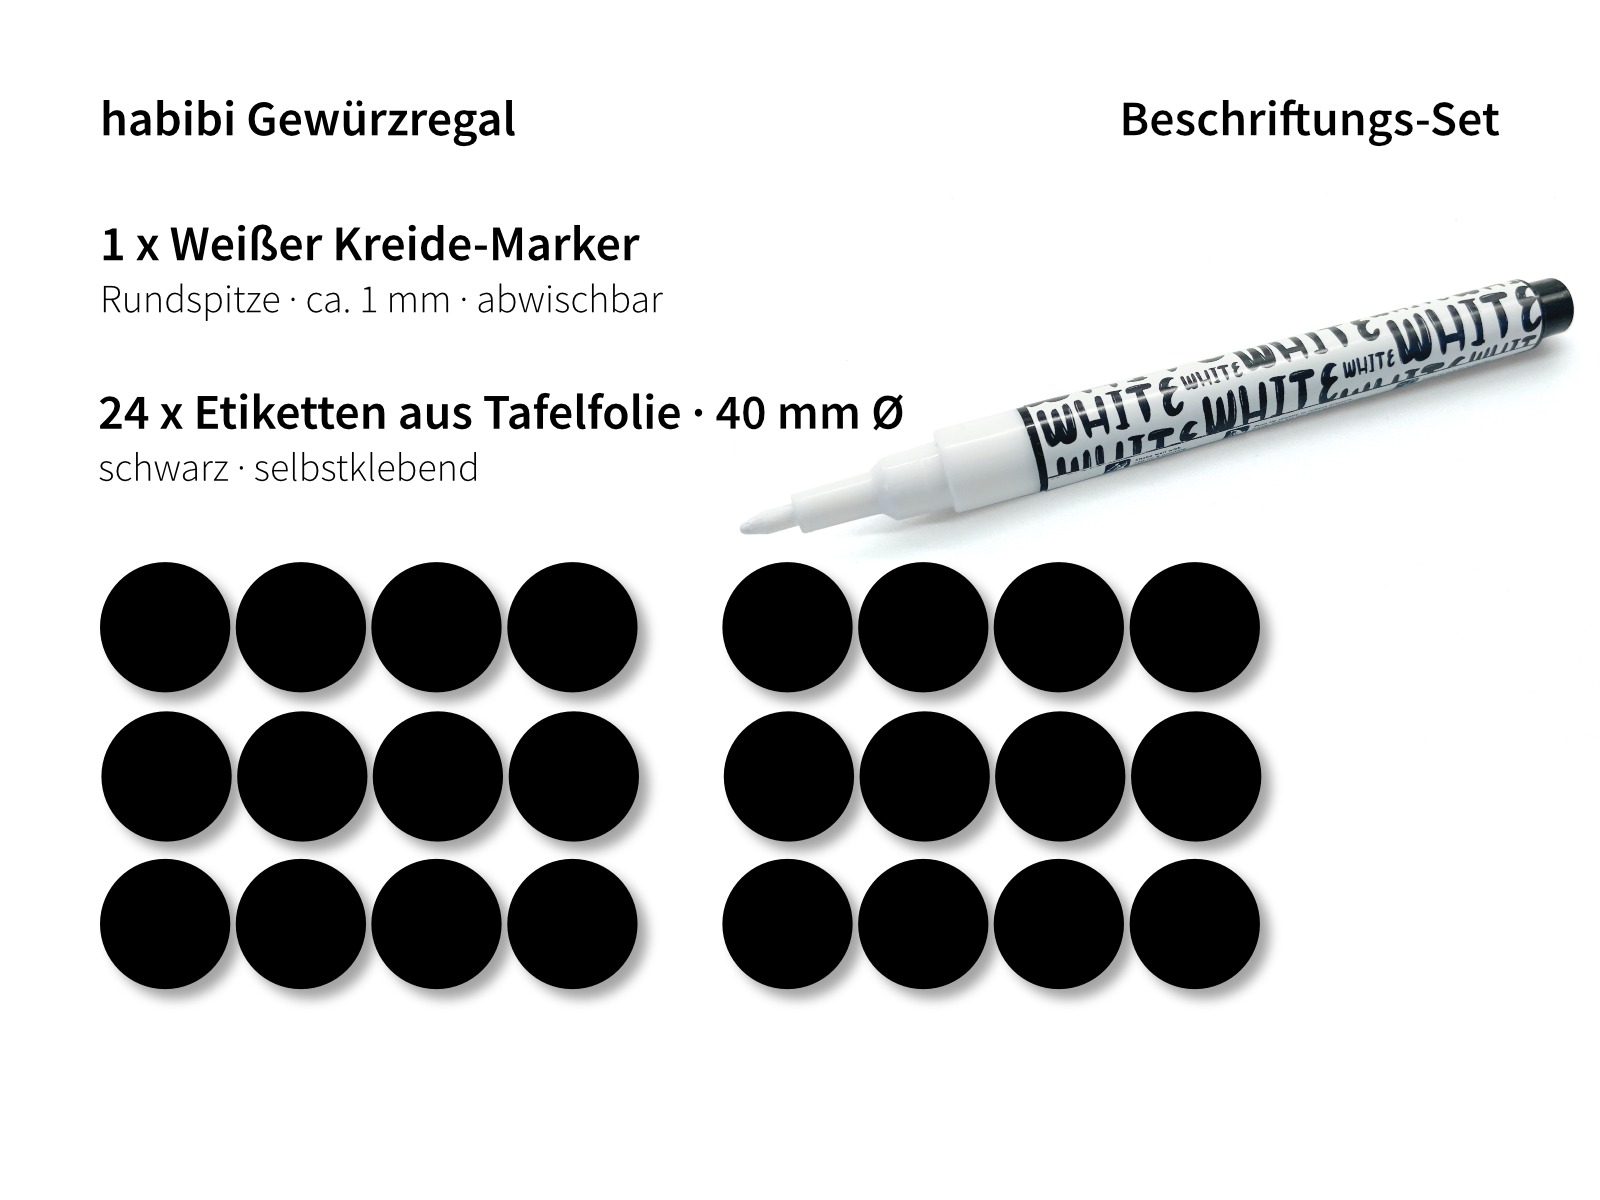 Beschriftungs-Set 24 x Etiketten 1 x Weißer Kreide-Marker ca. 1 mm feine Spitze 2